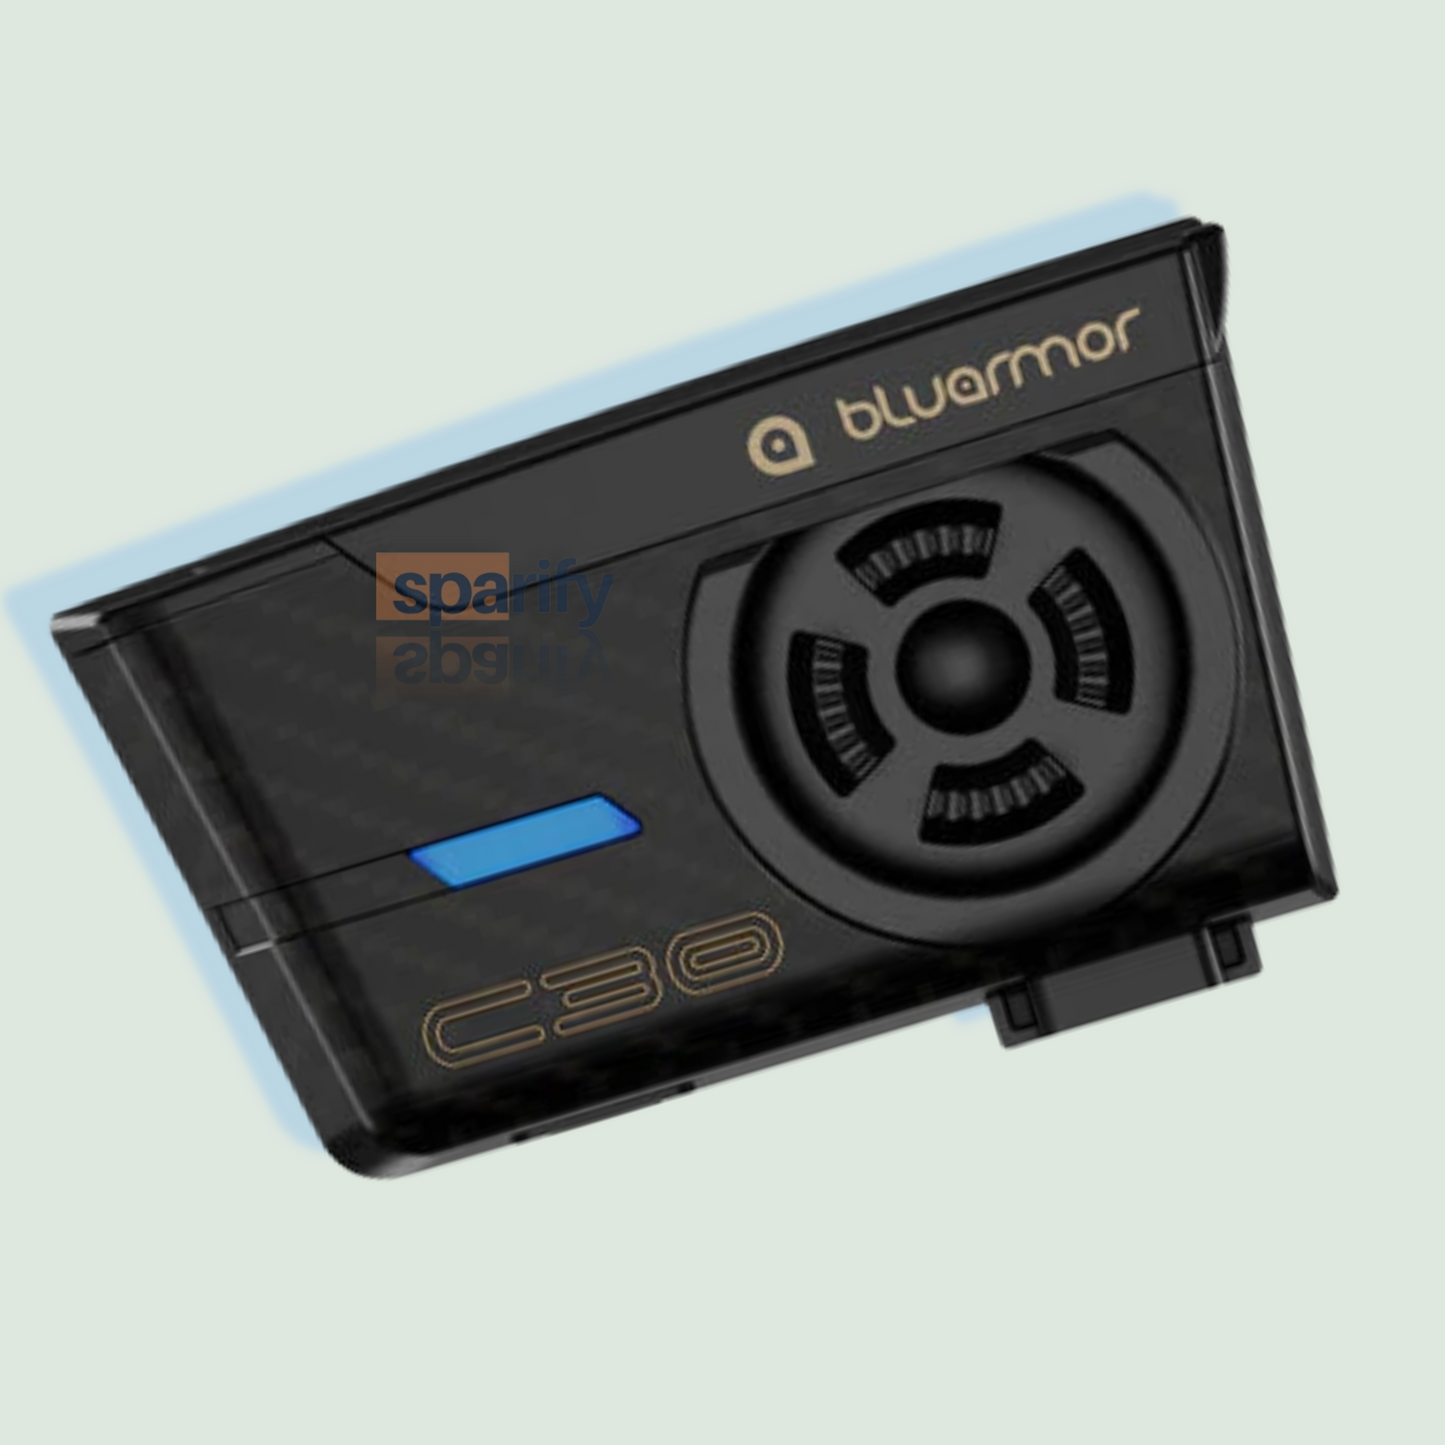 BluArmor C30 Intercom Bluetooth communication System